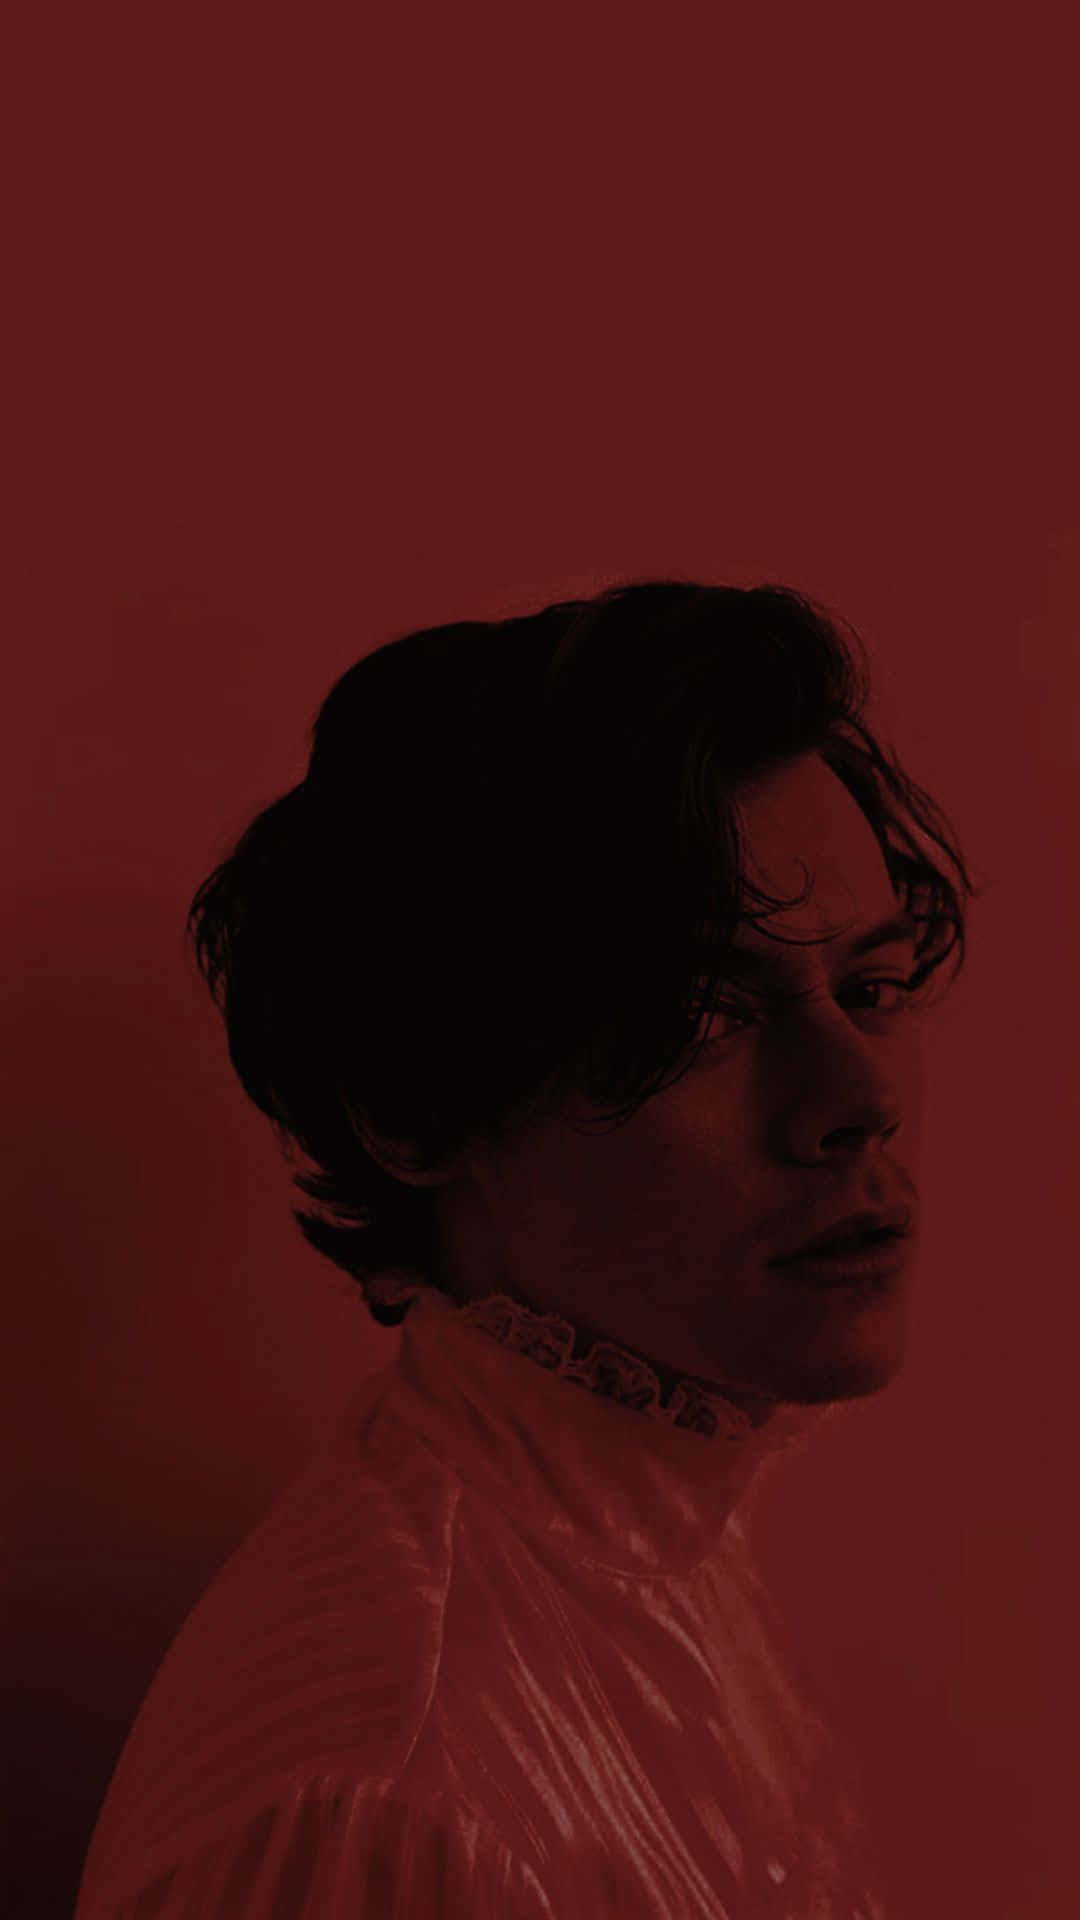 Harry Styles Releases His Latest Album, Fine Line, Featuring Creative Album Cover Design Wallpaper